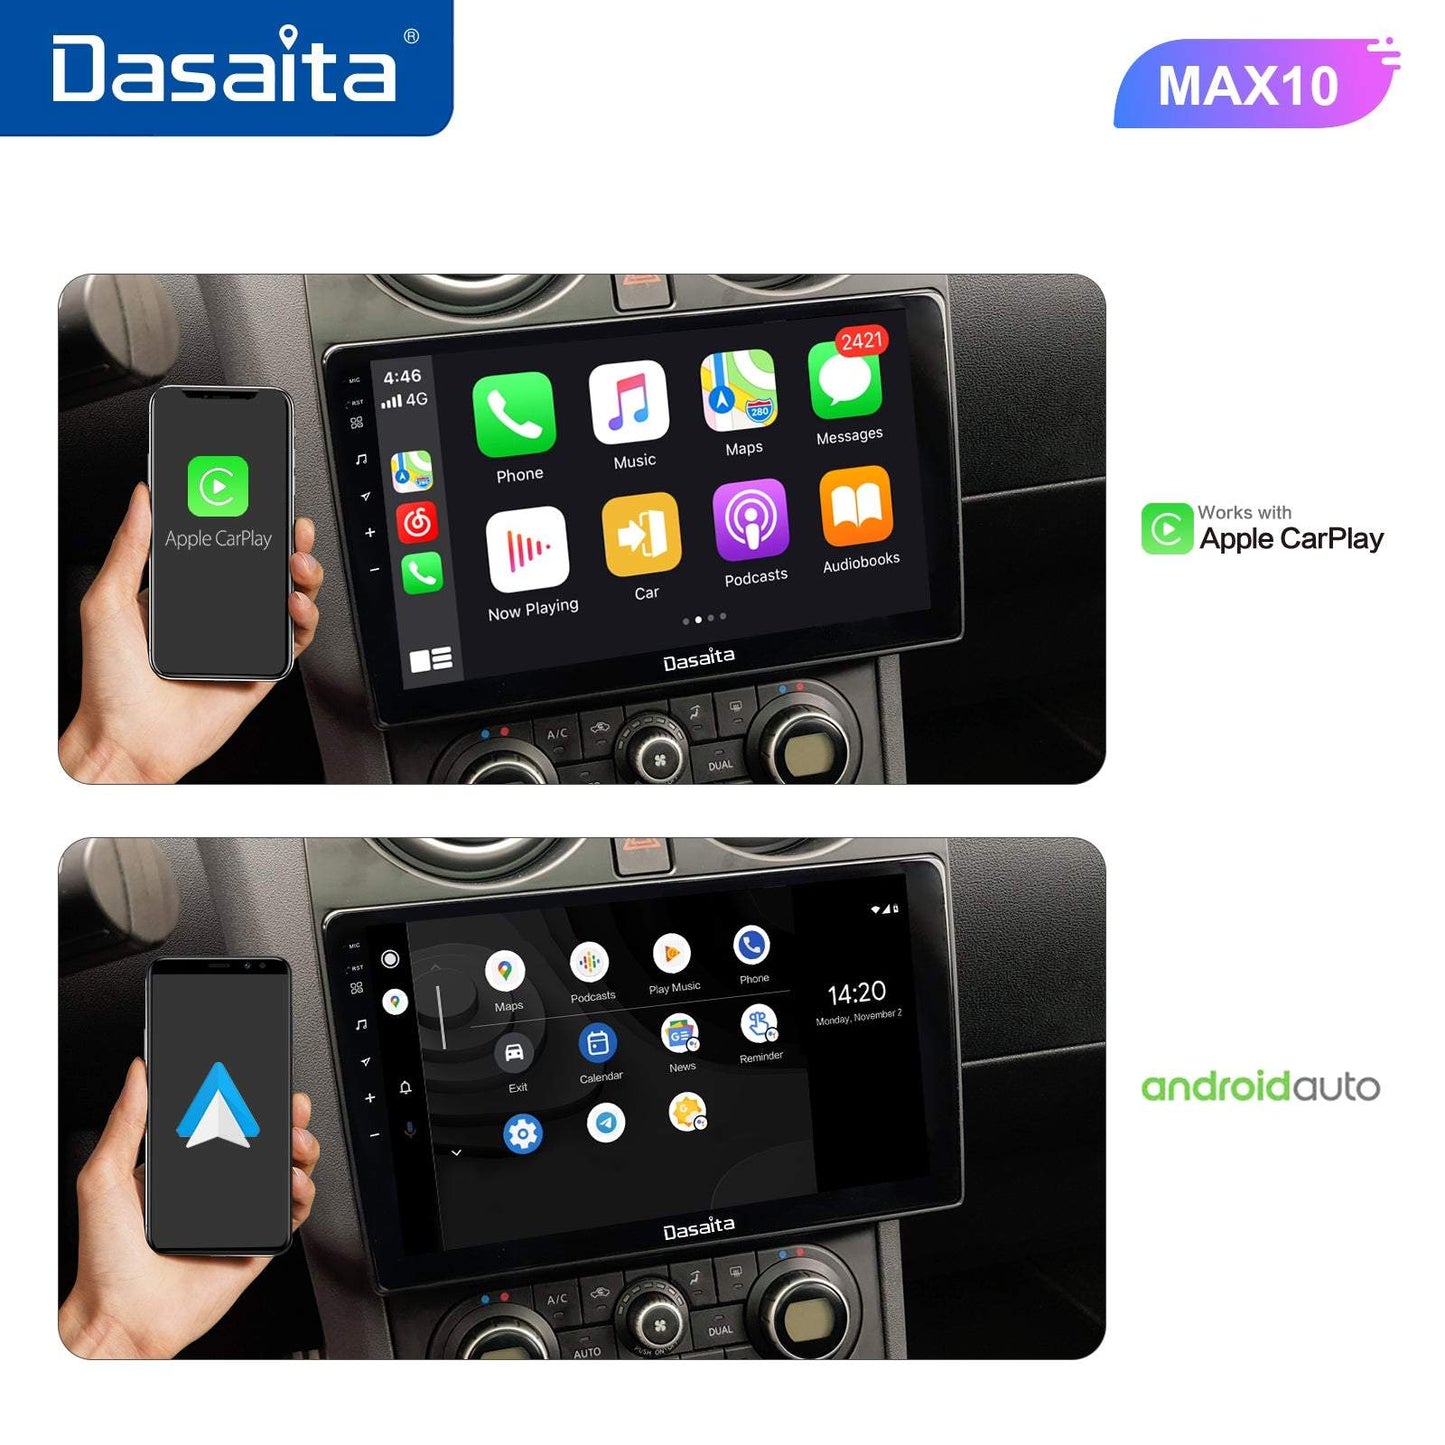 Dasaita (Outlets) MAX10 Nissan Qashqai 2008 2009 2010 2011 2012 2013 2014 Car Stereo 9" Carplay Android Auto PX6 4G+64G Android10 1280*720 DSP Radio